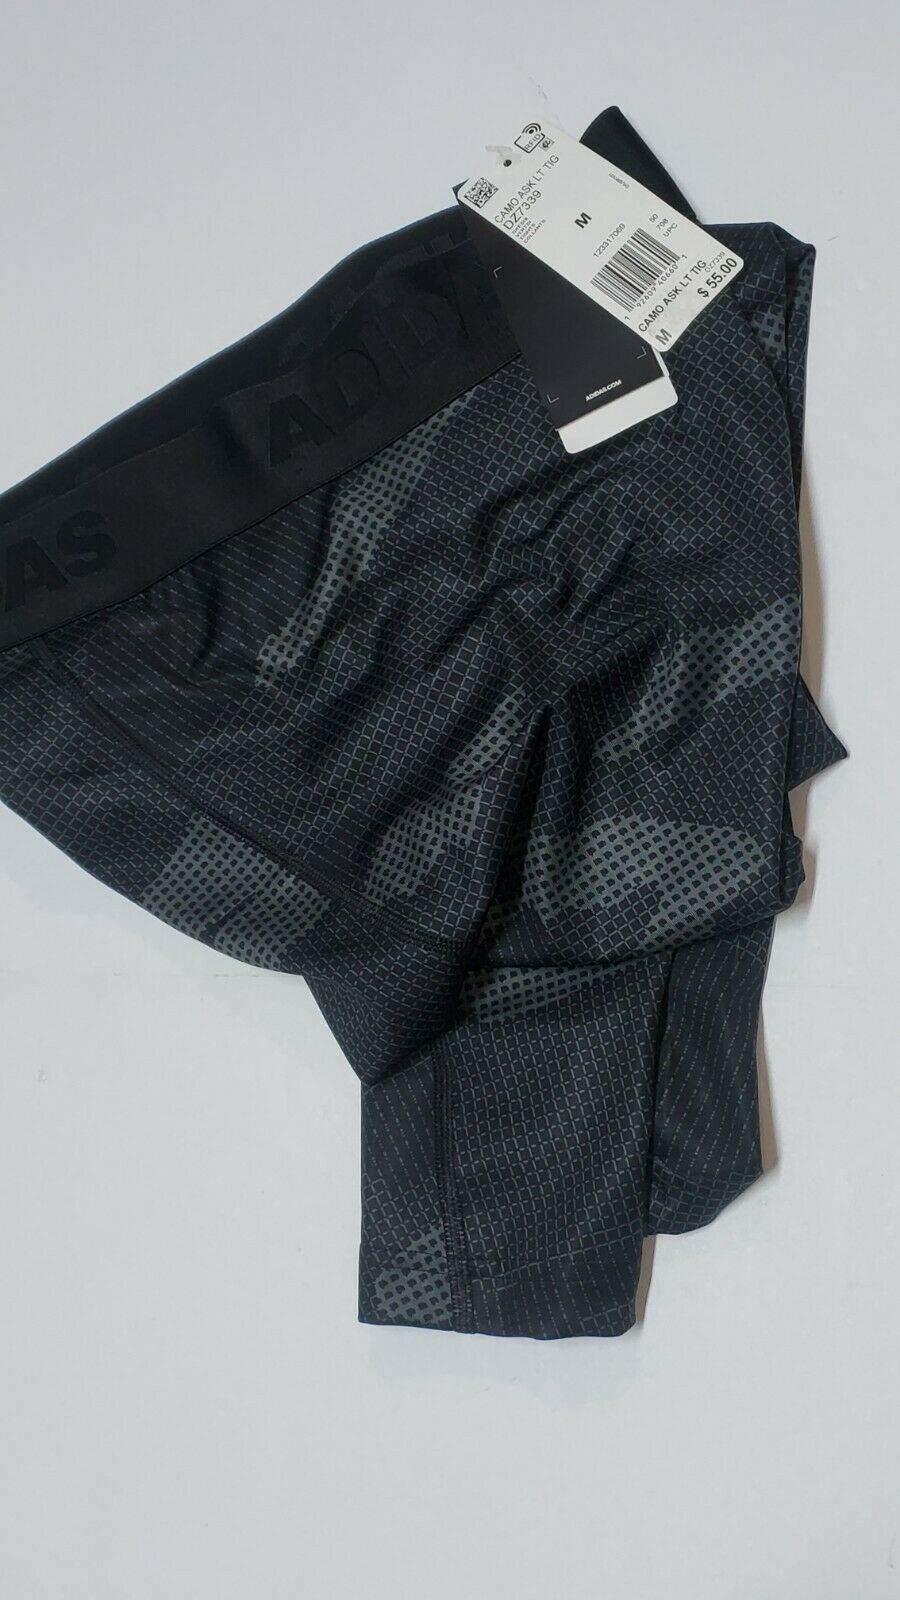 Adidas Black Camouflage Ask Men's Sports Leggings Running Training Camo Lt Tig